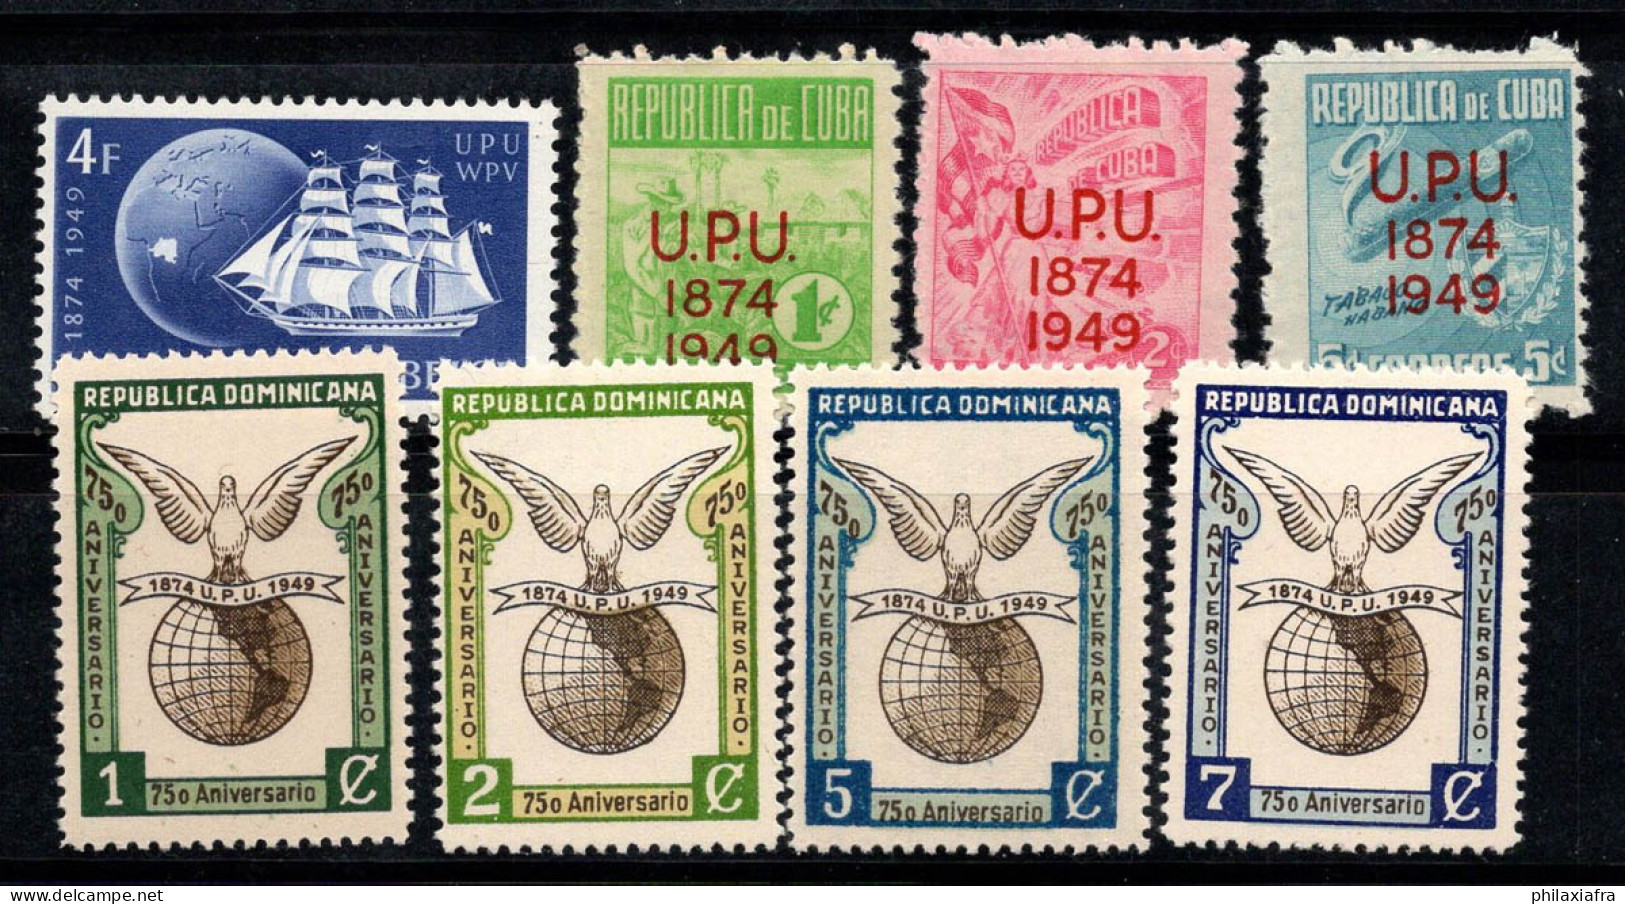 UPU 1949-50 Neuf ** 100% République Dominicaine, Congo - UPU (Union Postale Universelle)